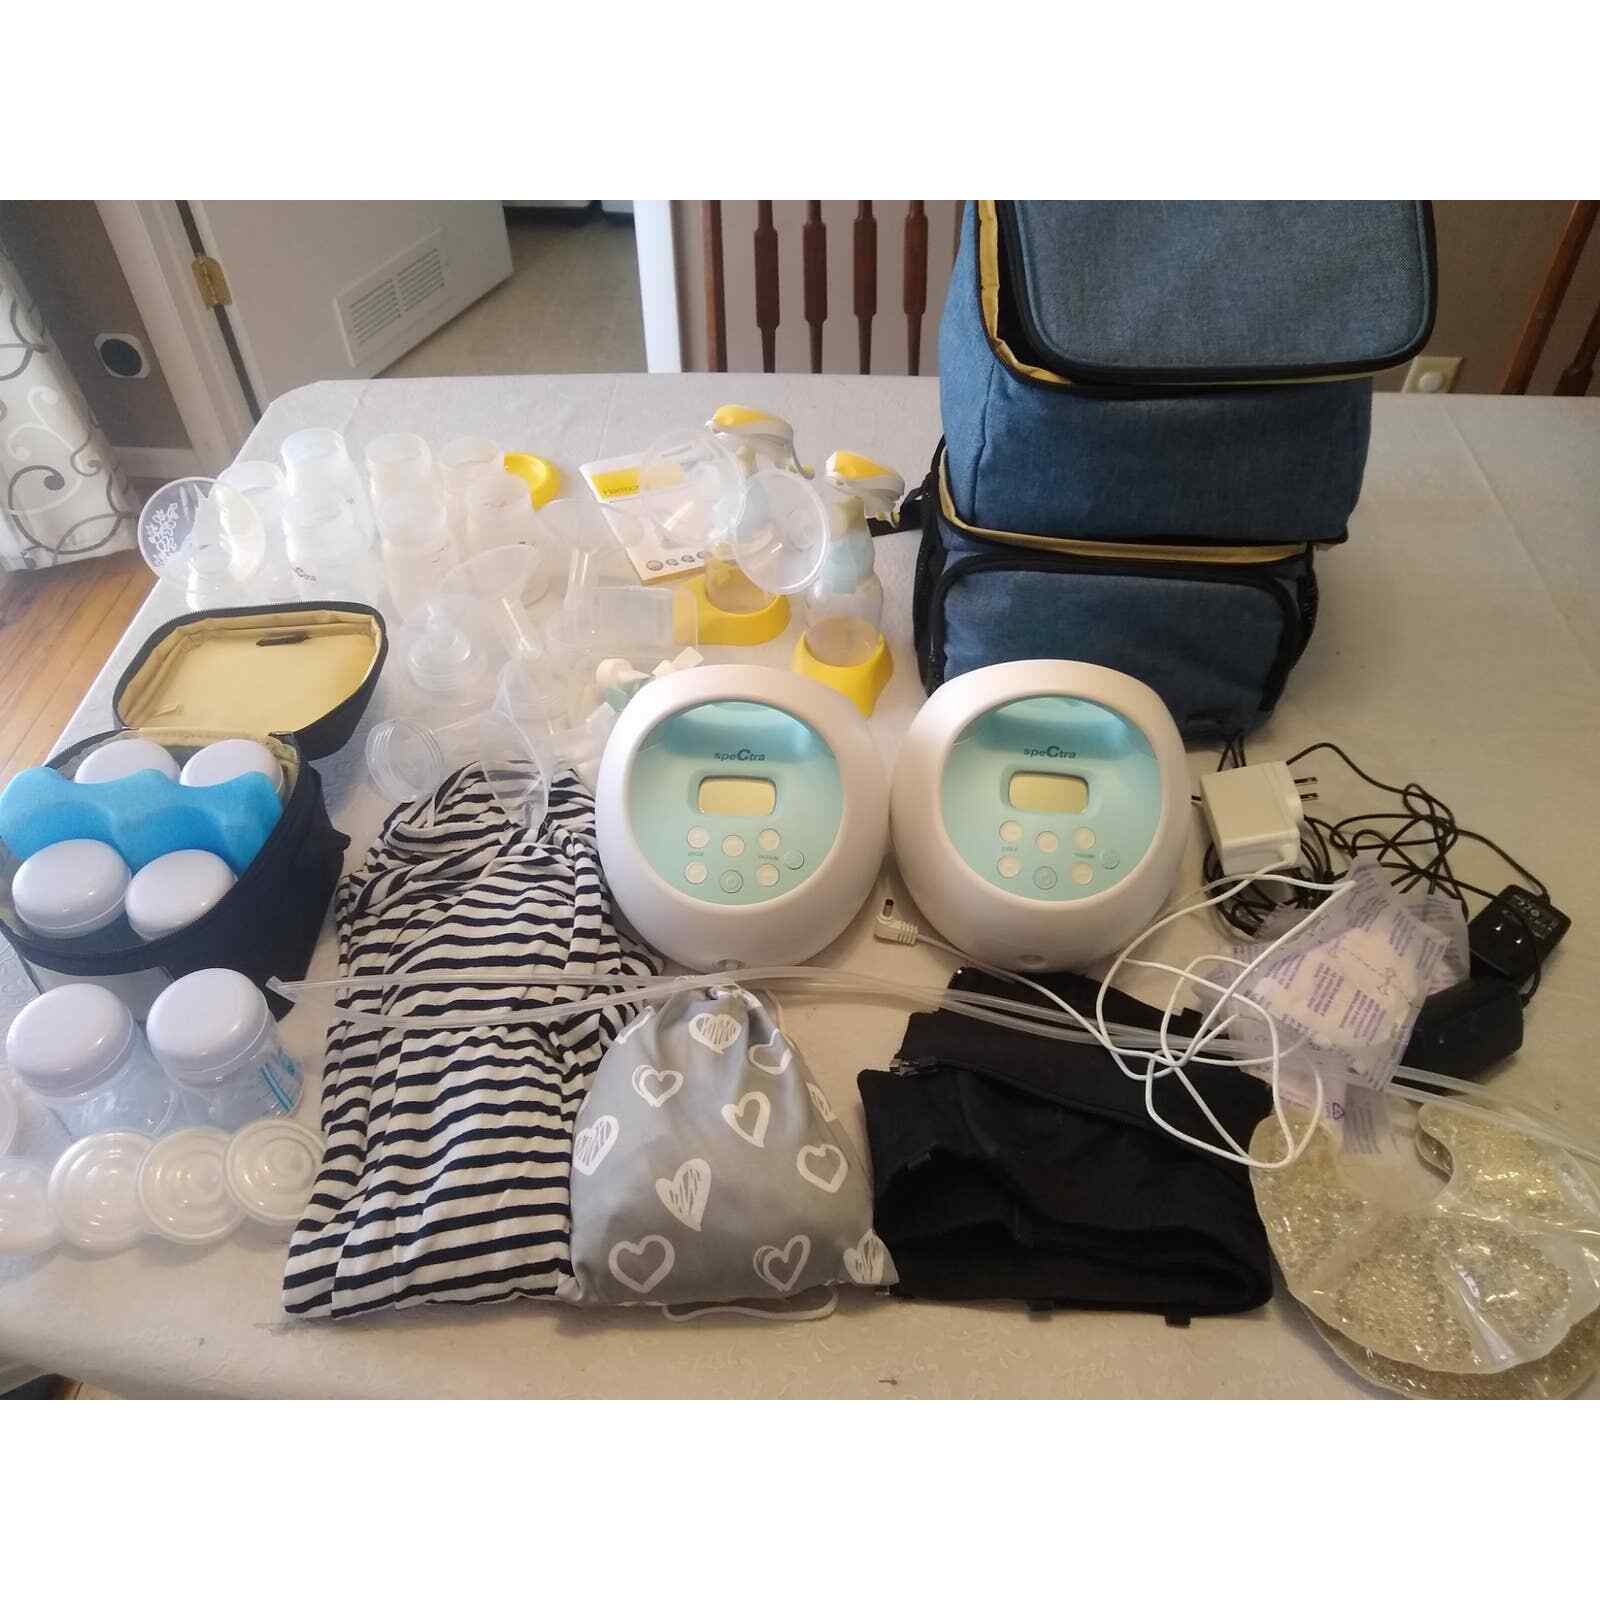 Breastfeeding Set: Pumps, Bag, Covers, Bottles